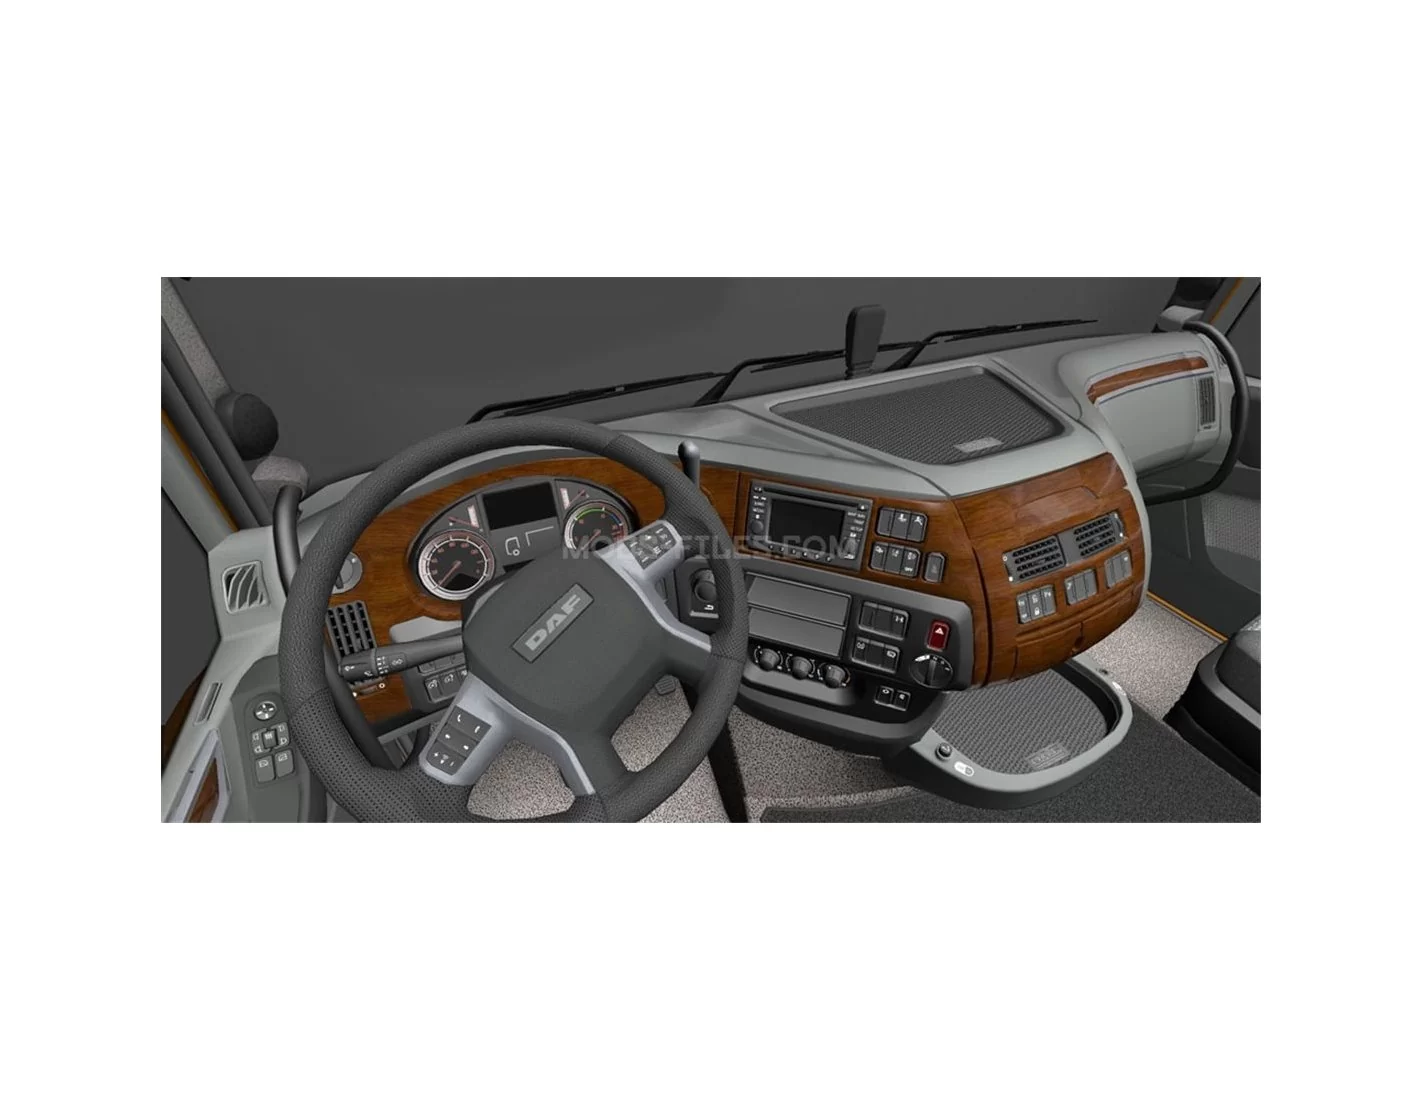 Daf XF 105 01.2006 3M 3D Interior Dashboard Trim Kit Dash Trim Dekor 13-Parts